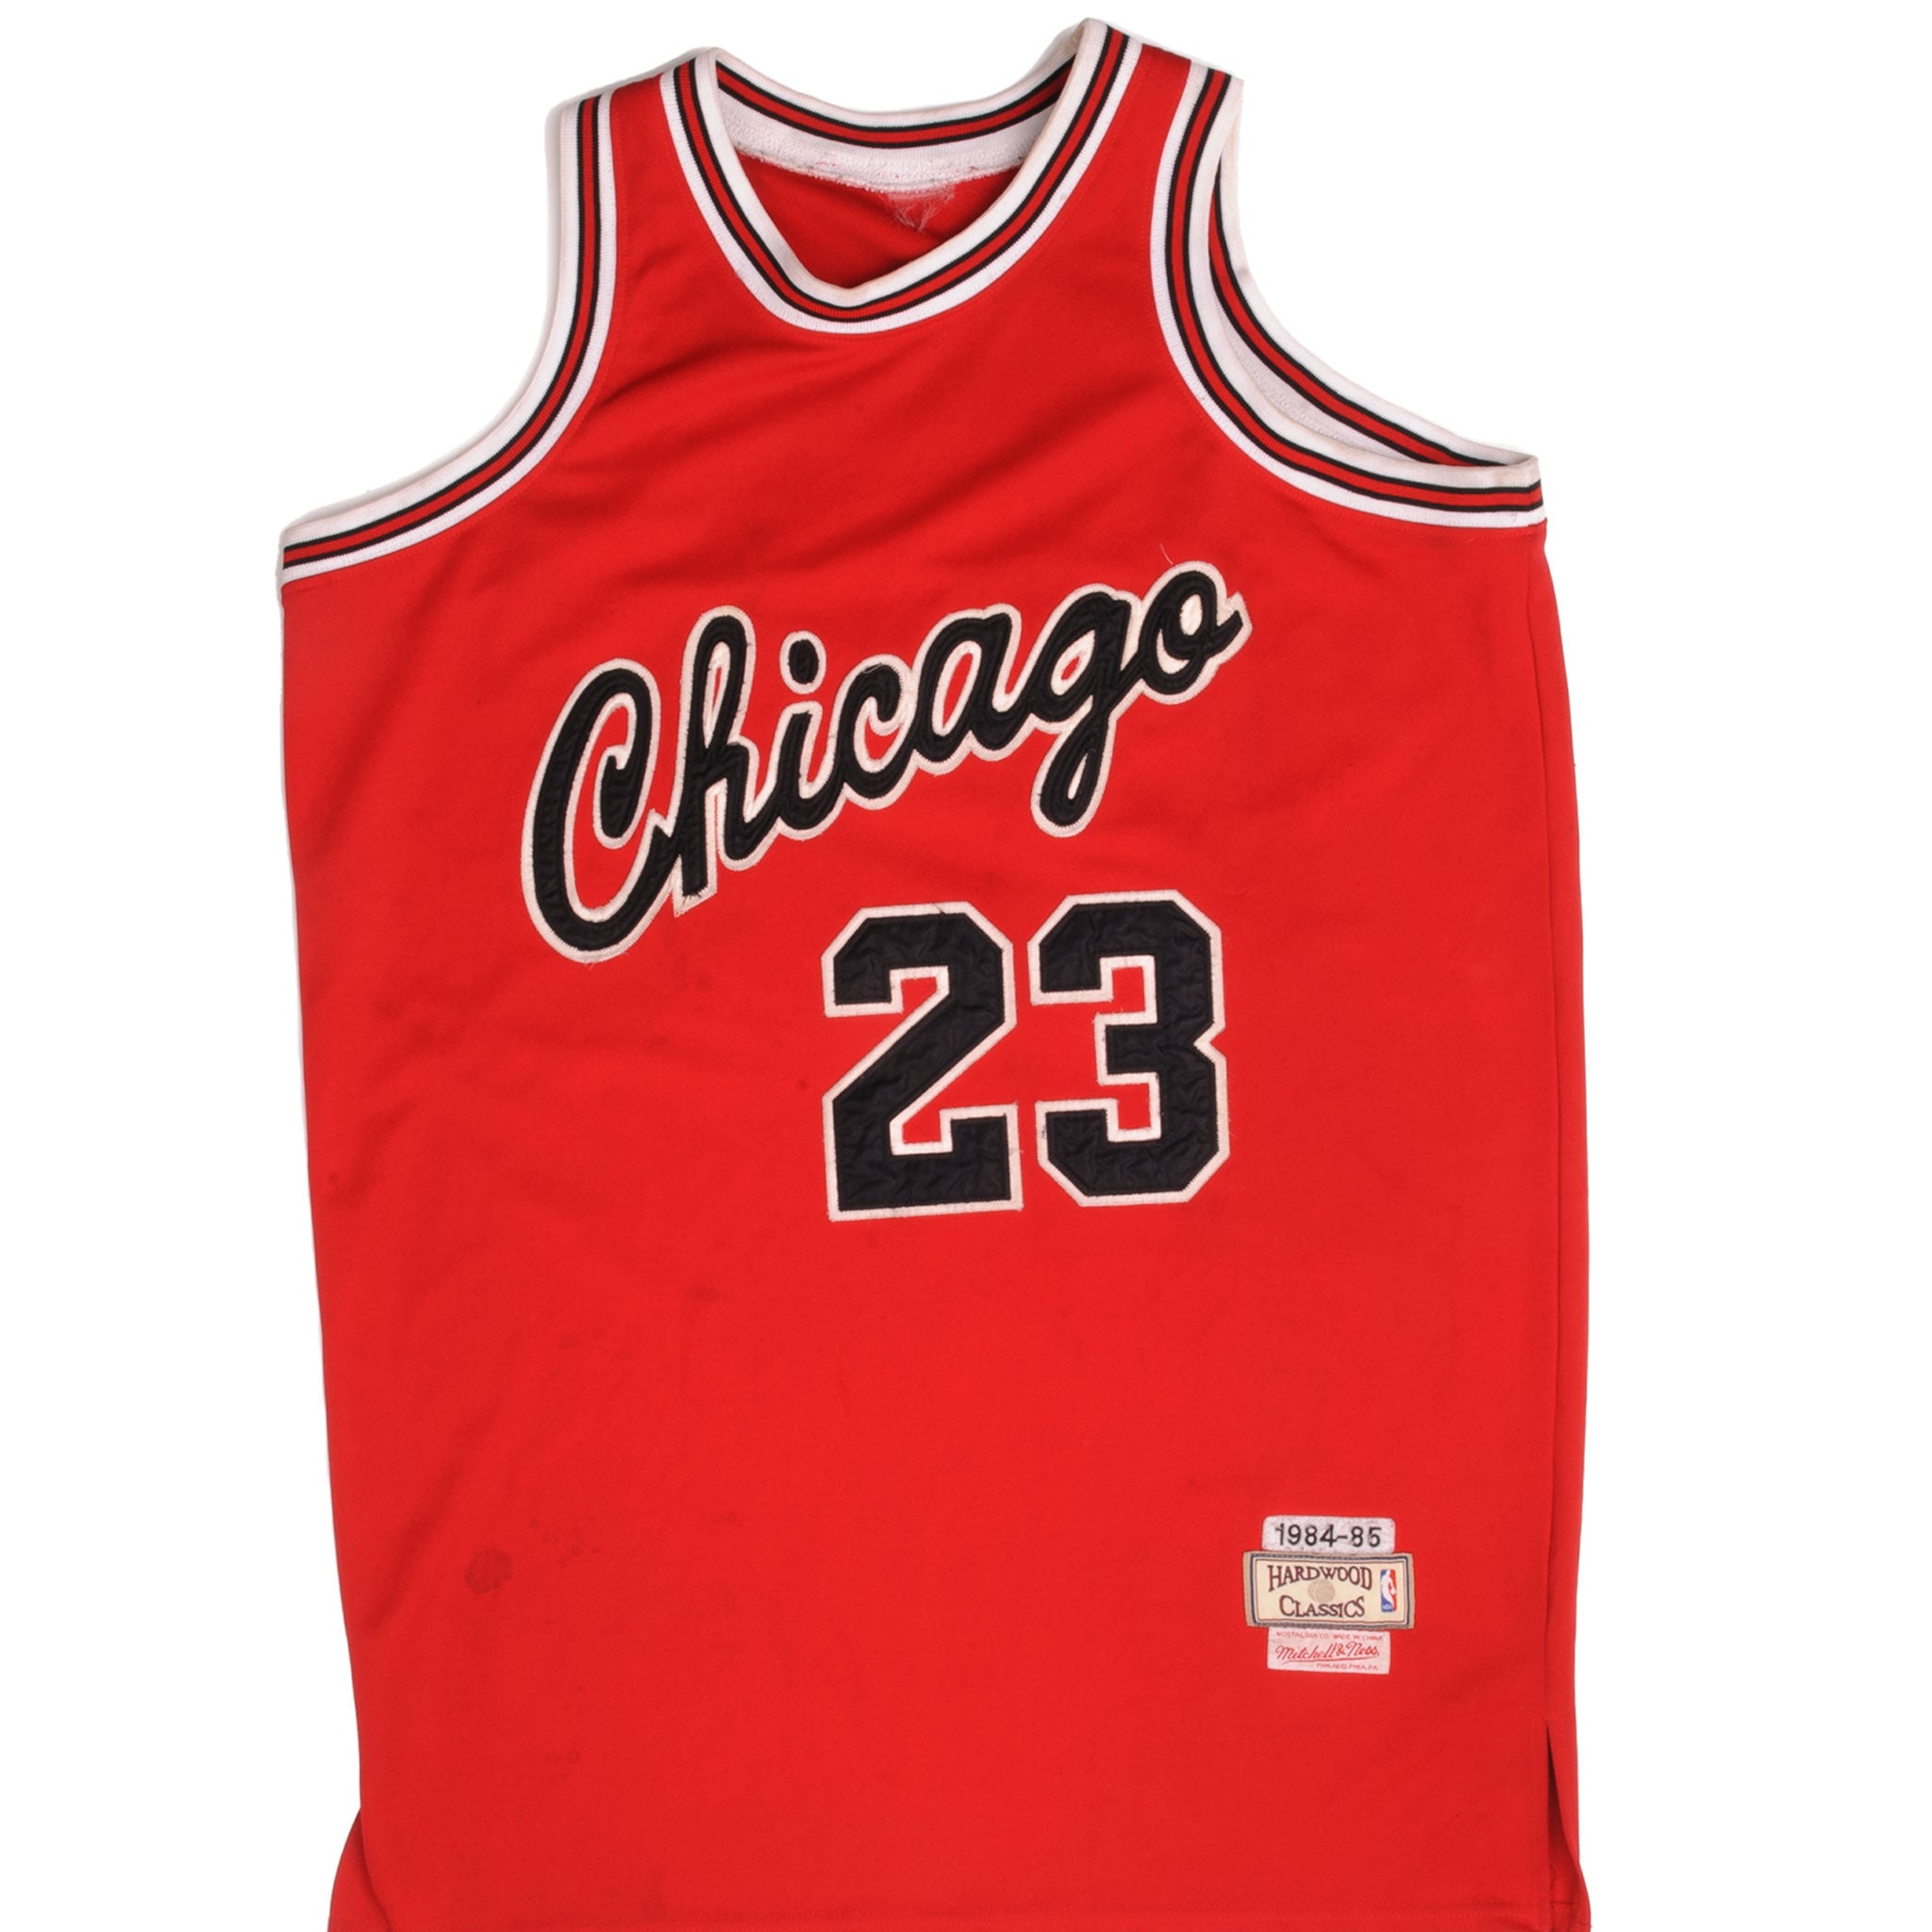 Chicago Bulls Latest Basketball Jersey